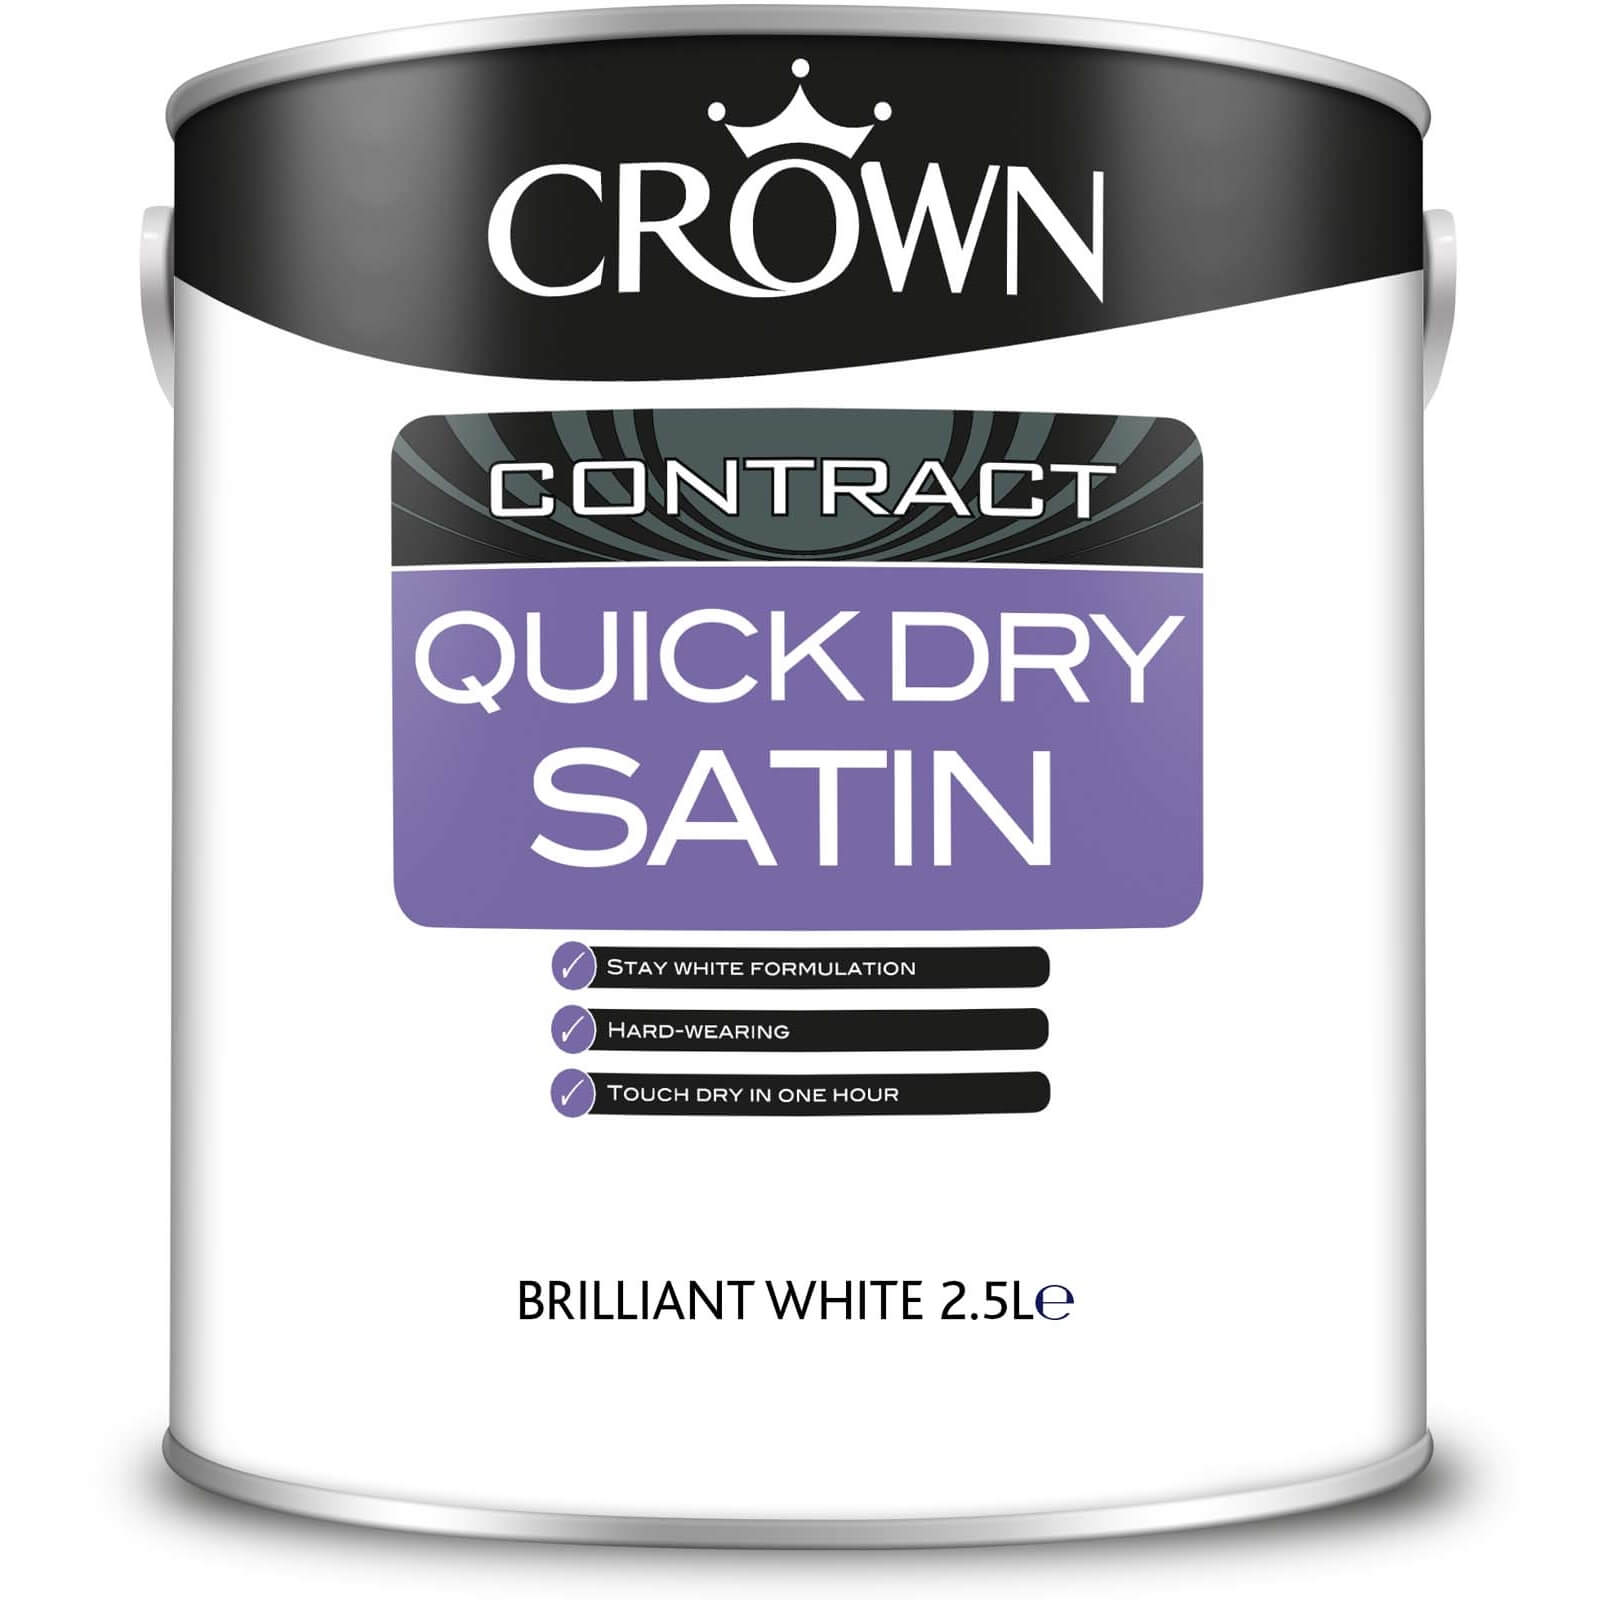 Crown Contract Quick Dry Satin Brilliant White Paint - 2.5L